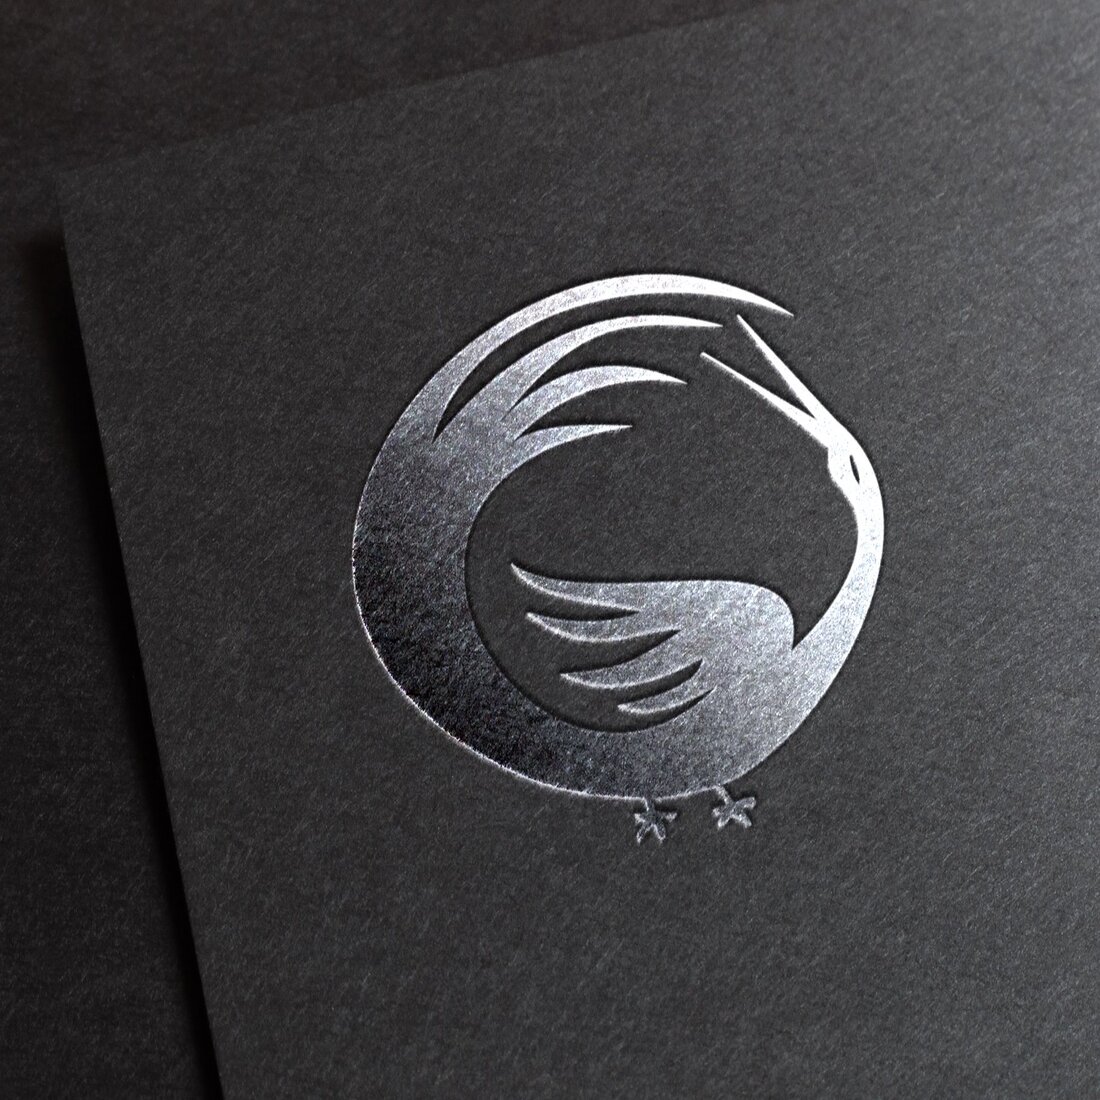 Stork font cover.